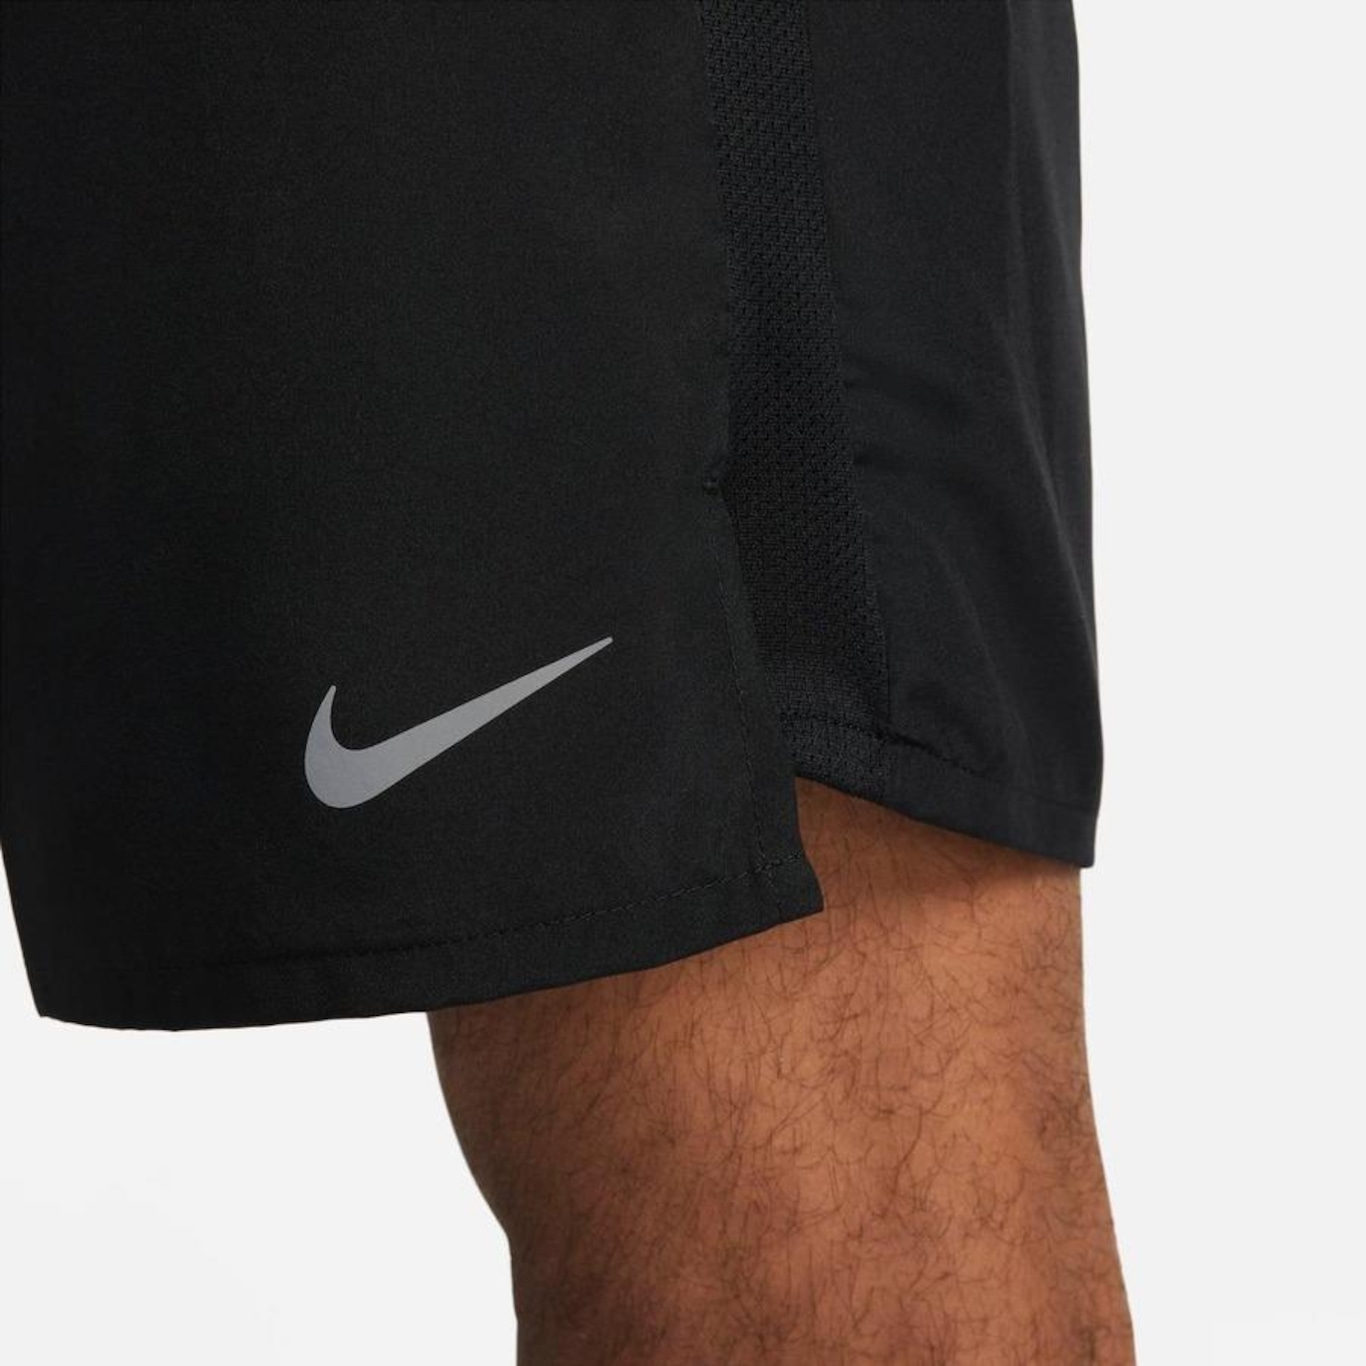 Shorts Nike Dri-FIT Challenger 2-in-1 - Masculino em Promoção